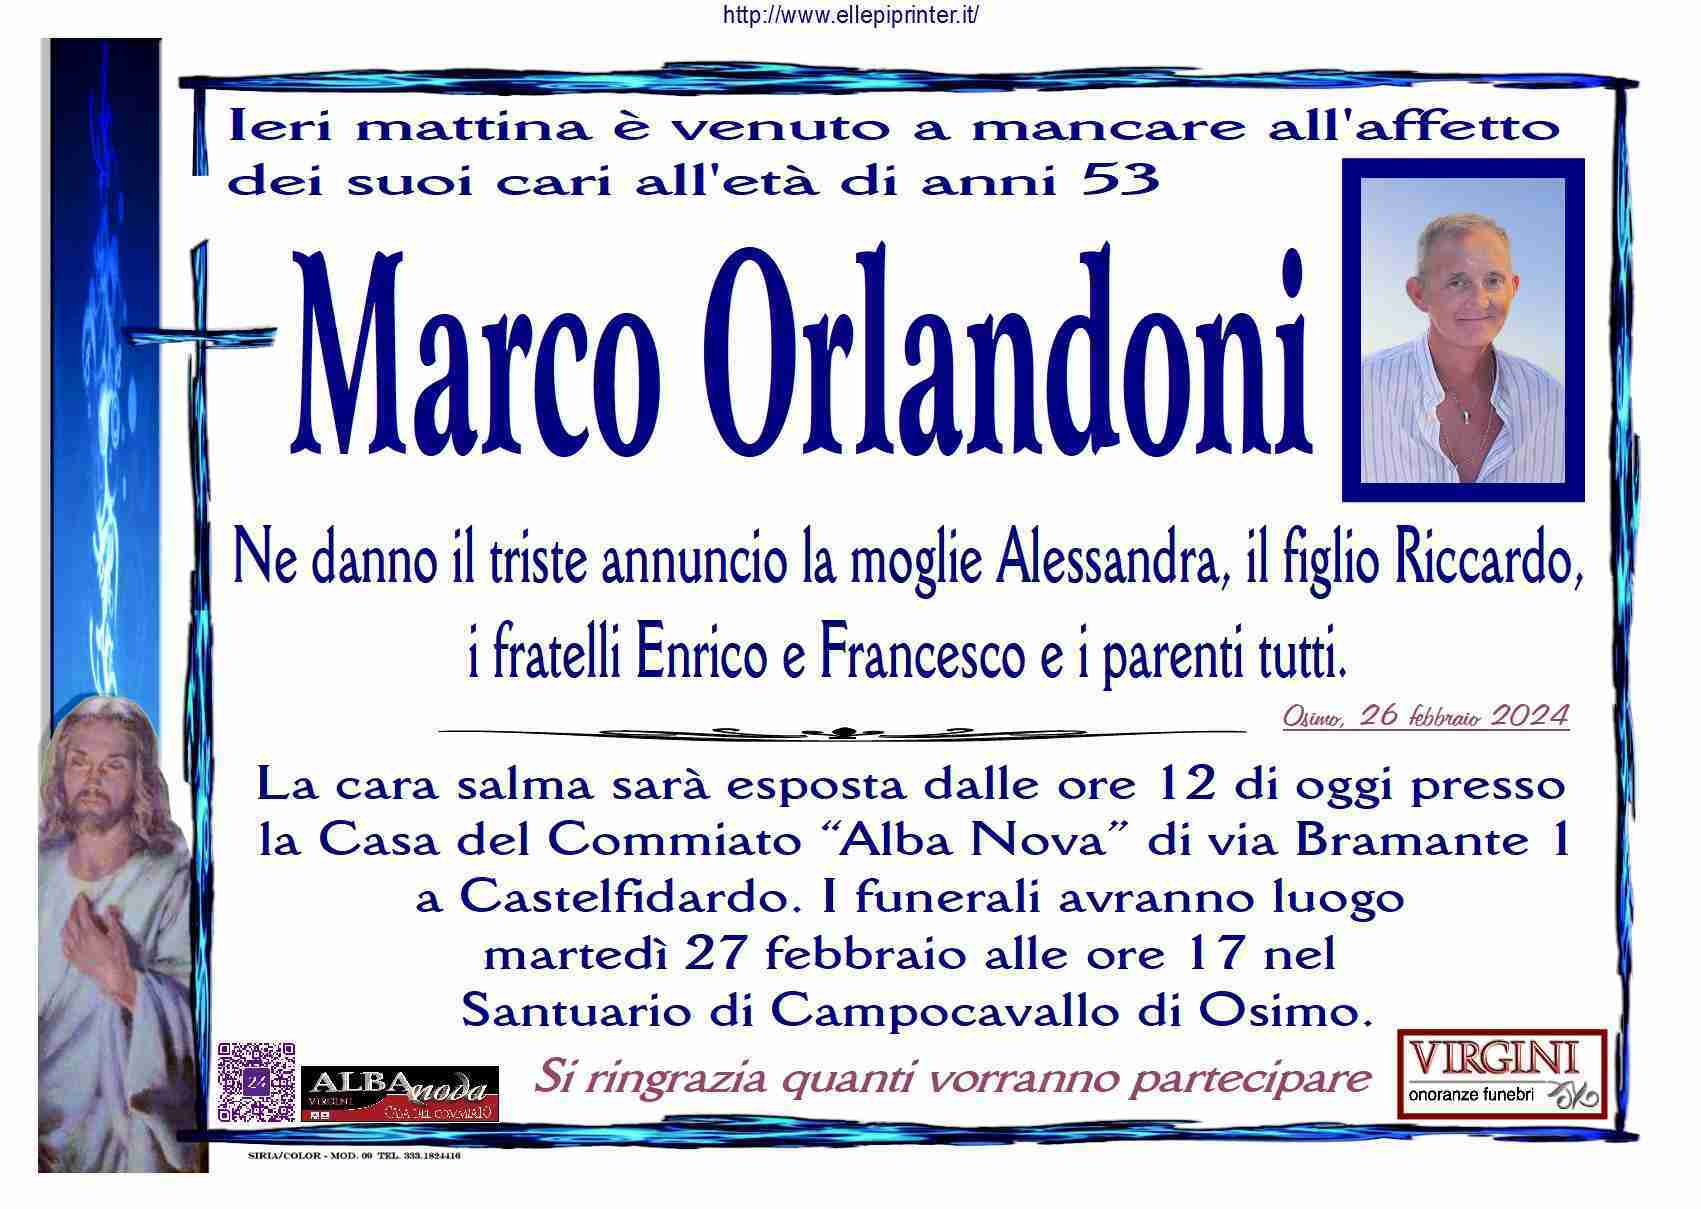 Marco Orlandoni